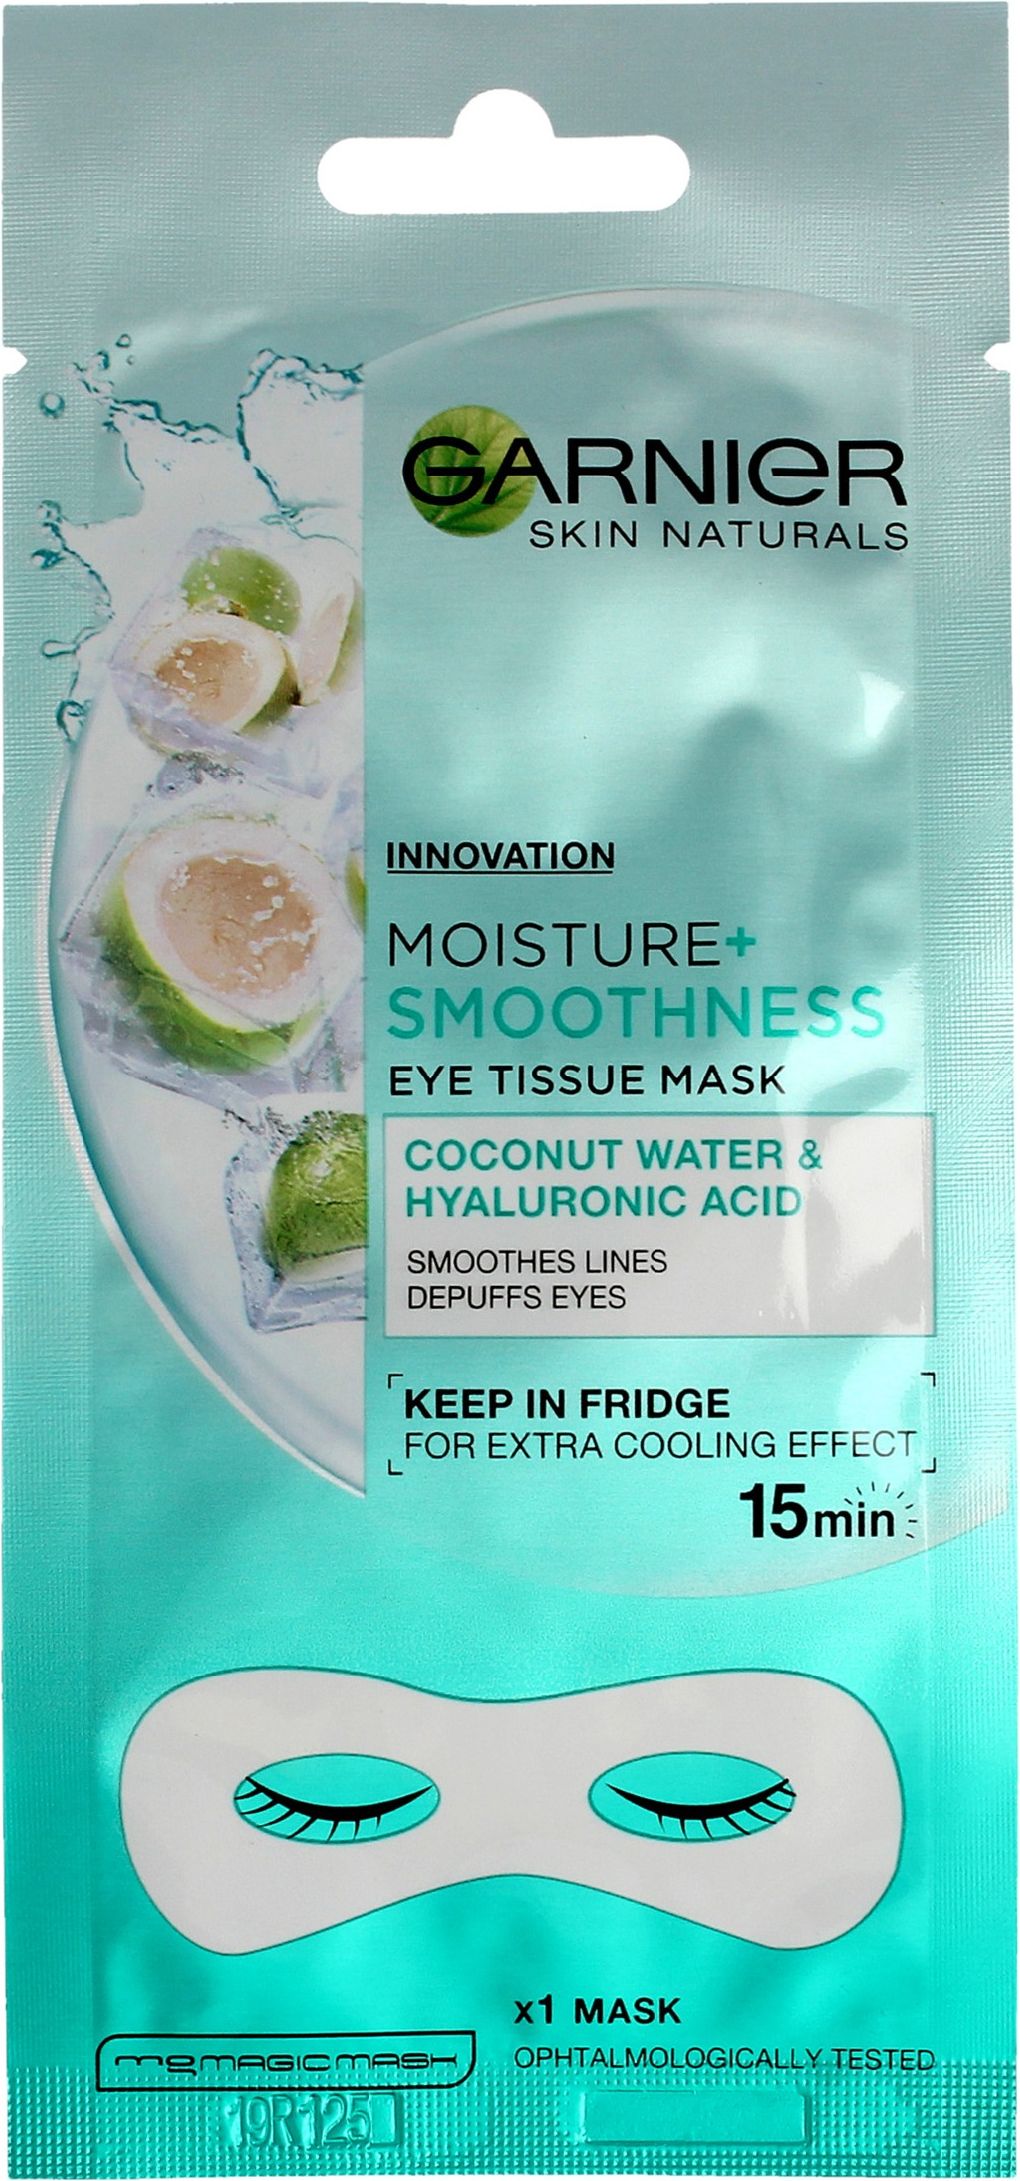 Garnier Skin Naturals Moisture + Maska pod oczy Coconut Water & Hyaluronic Acid 6g 0360625 (3600542154833)